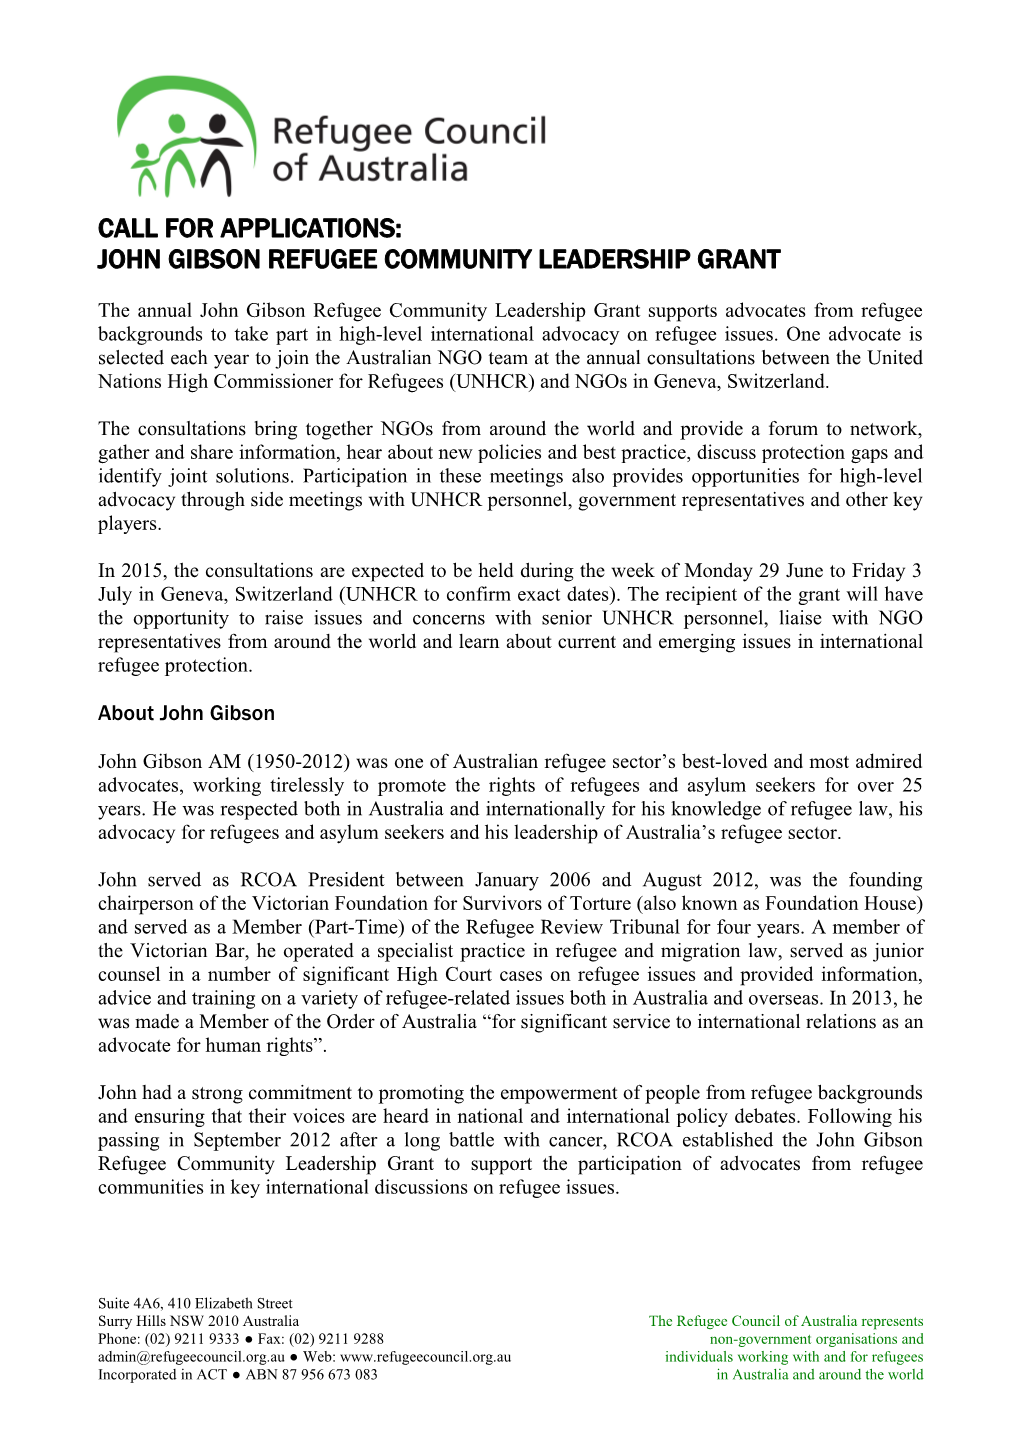 Call for Applications: John Gibson Refugee Community Leadership Grant